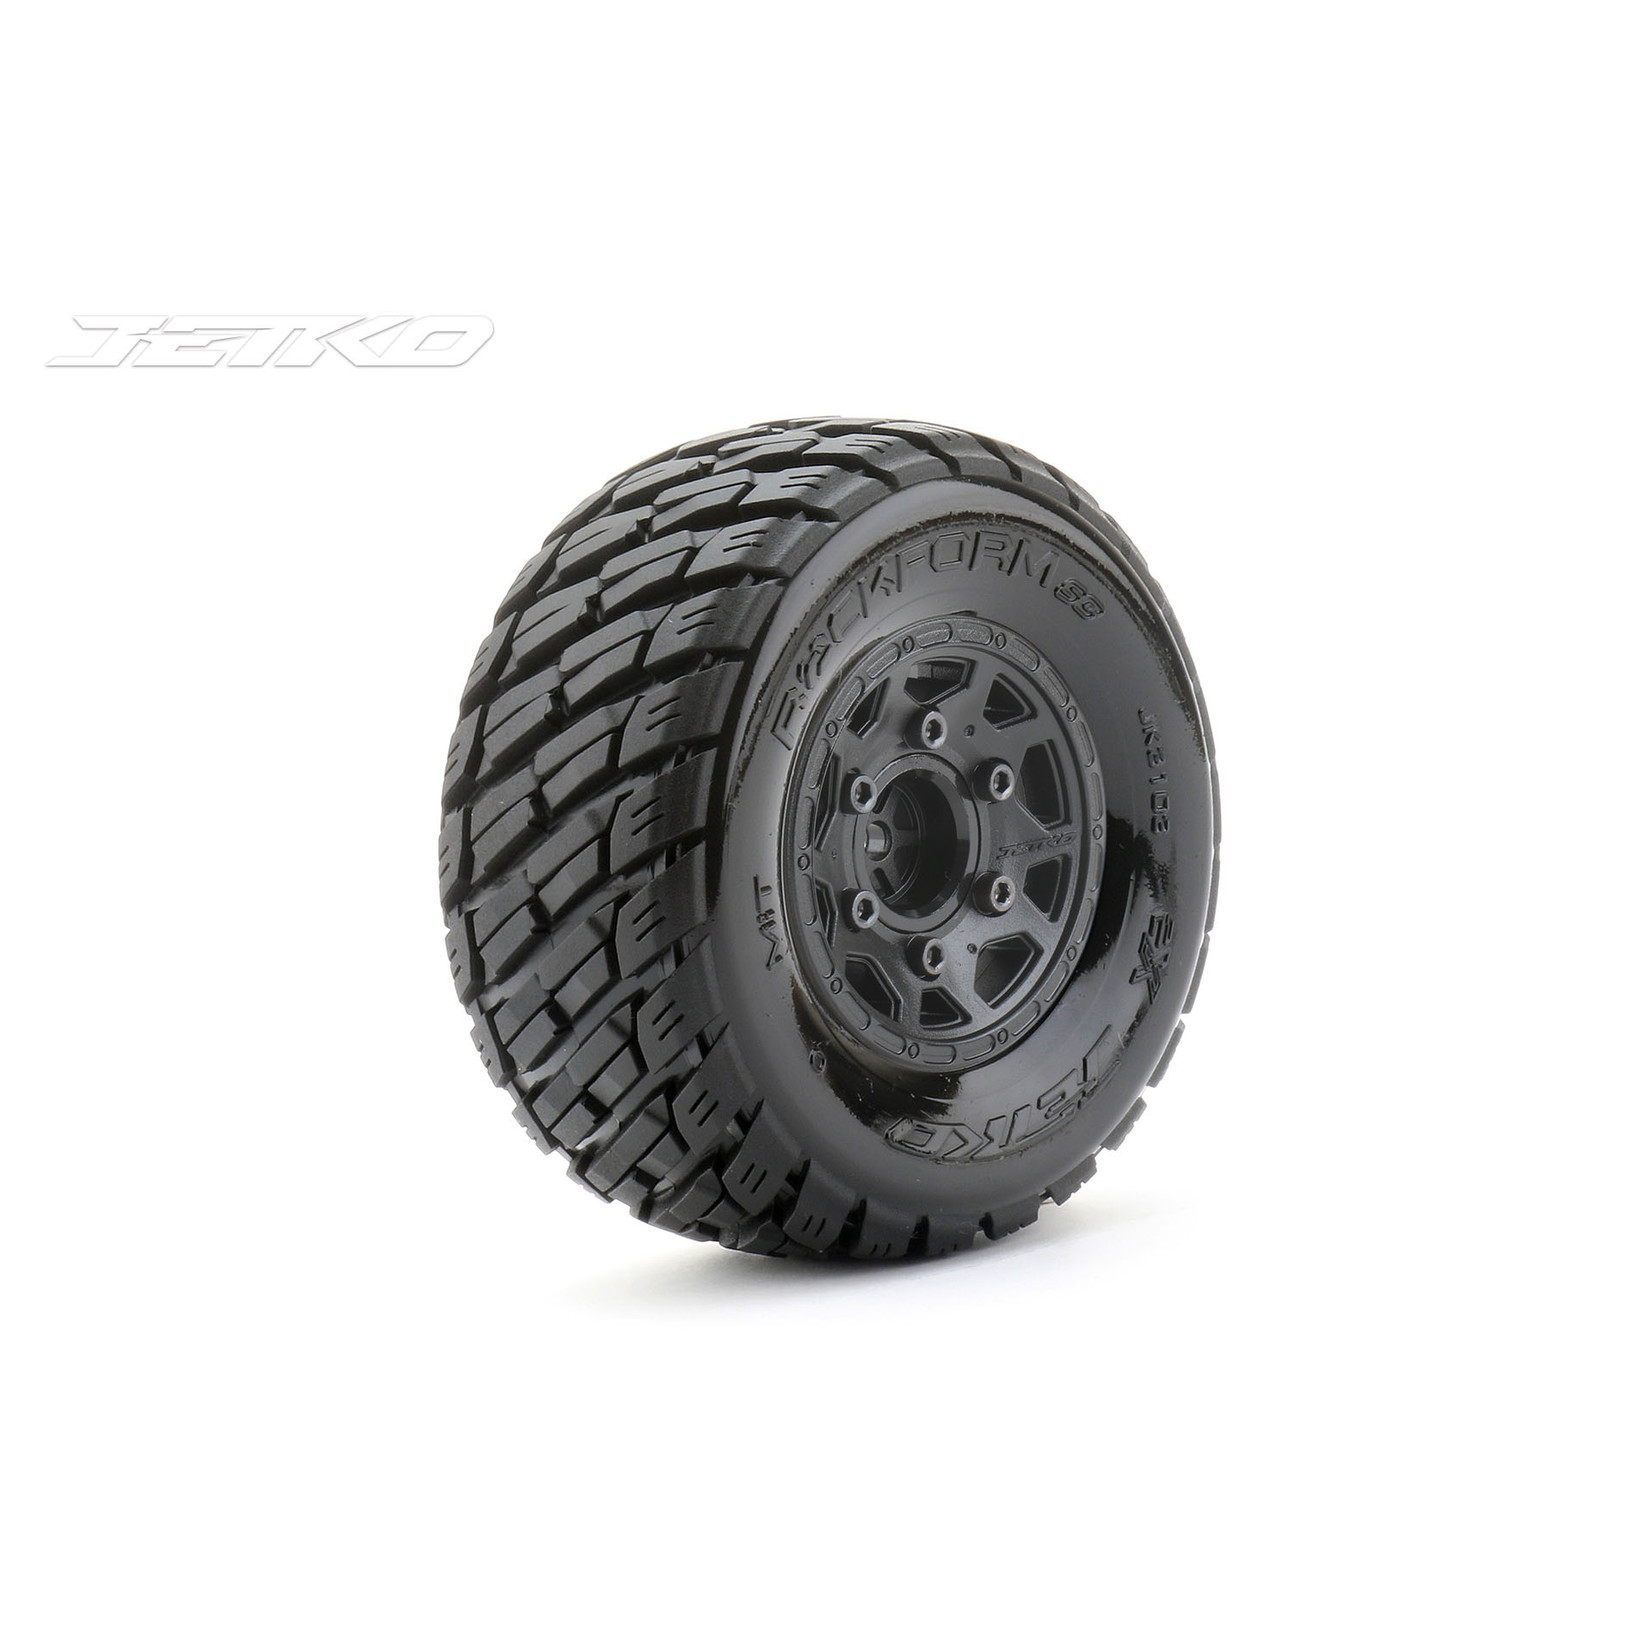 Jetko Tires Jetko 1/10 SC Offset Rockform Tires Mounted on Black Claw Rims (Medium Soft) #JKO3103CBMSGNB2